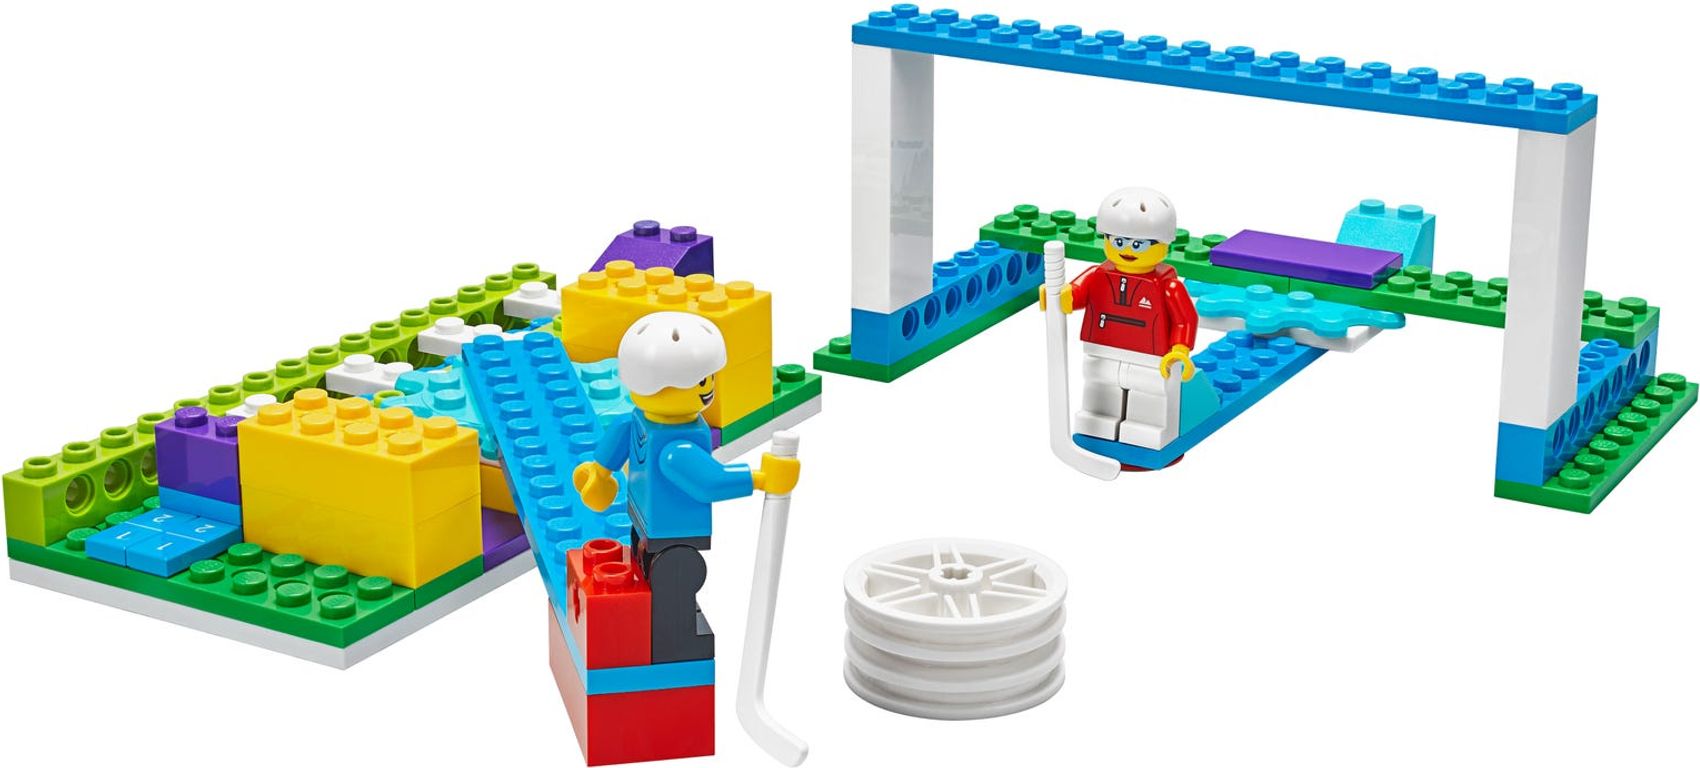 LEGO® Education BricQ Motion Essential Set components